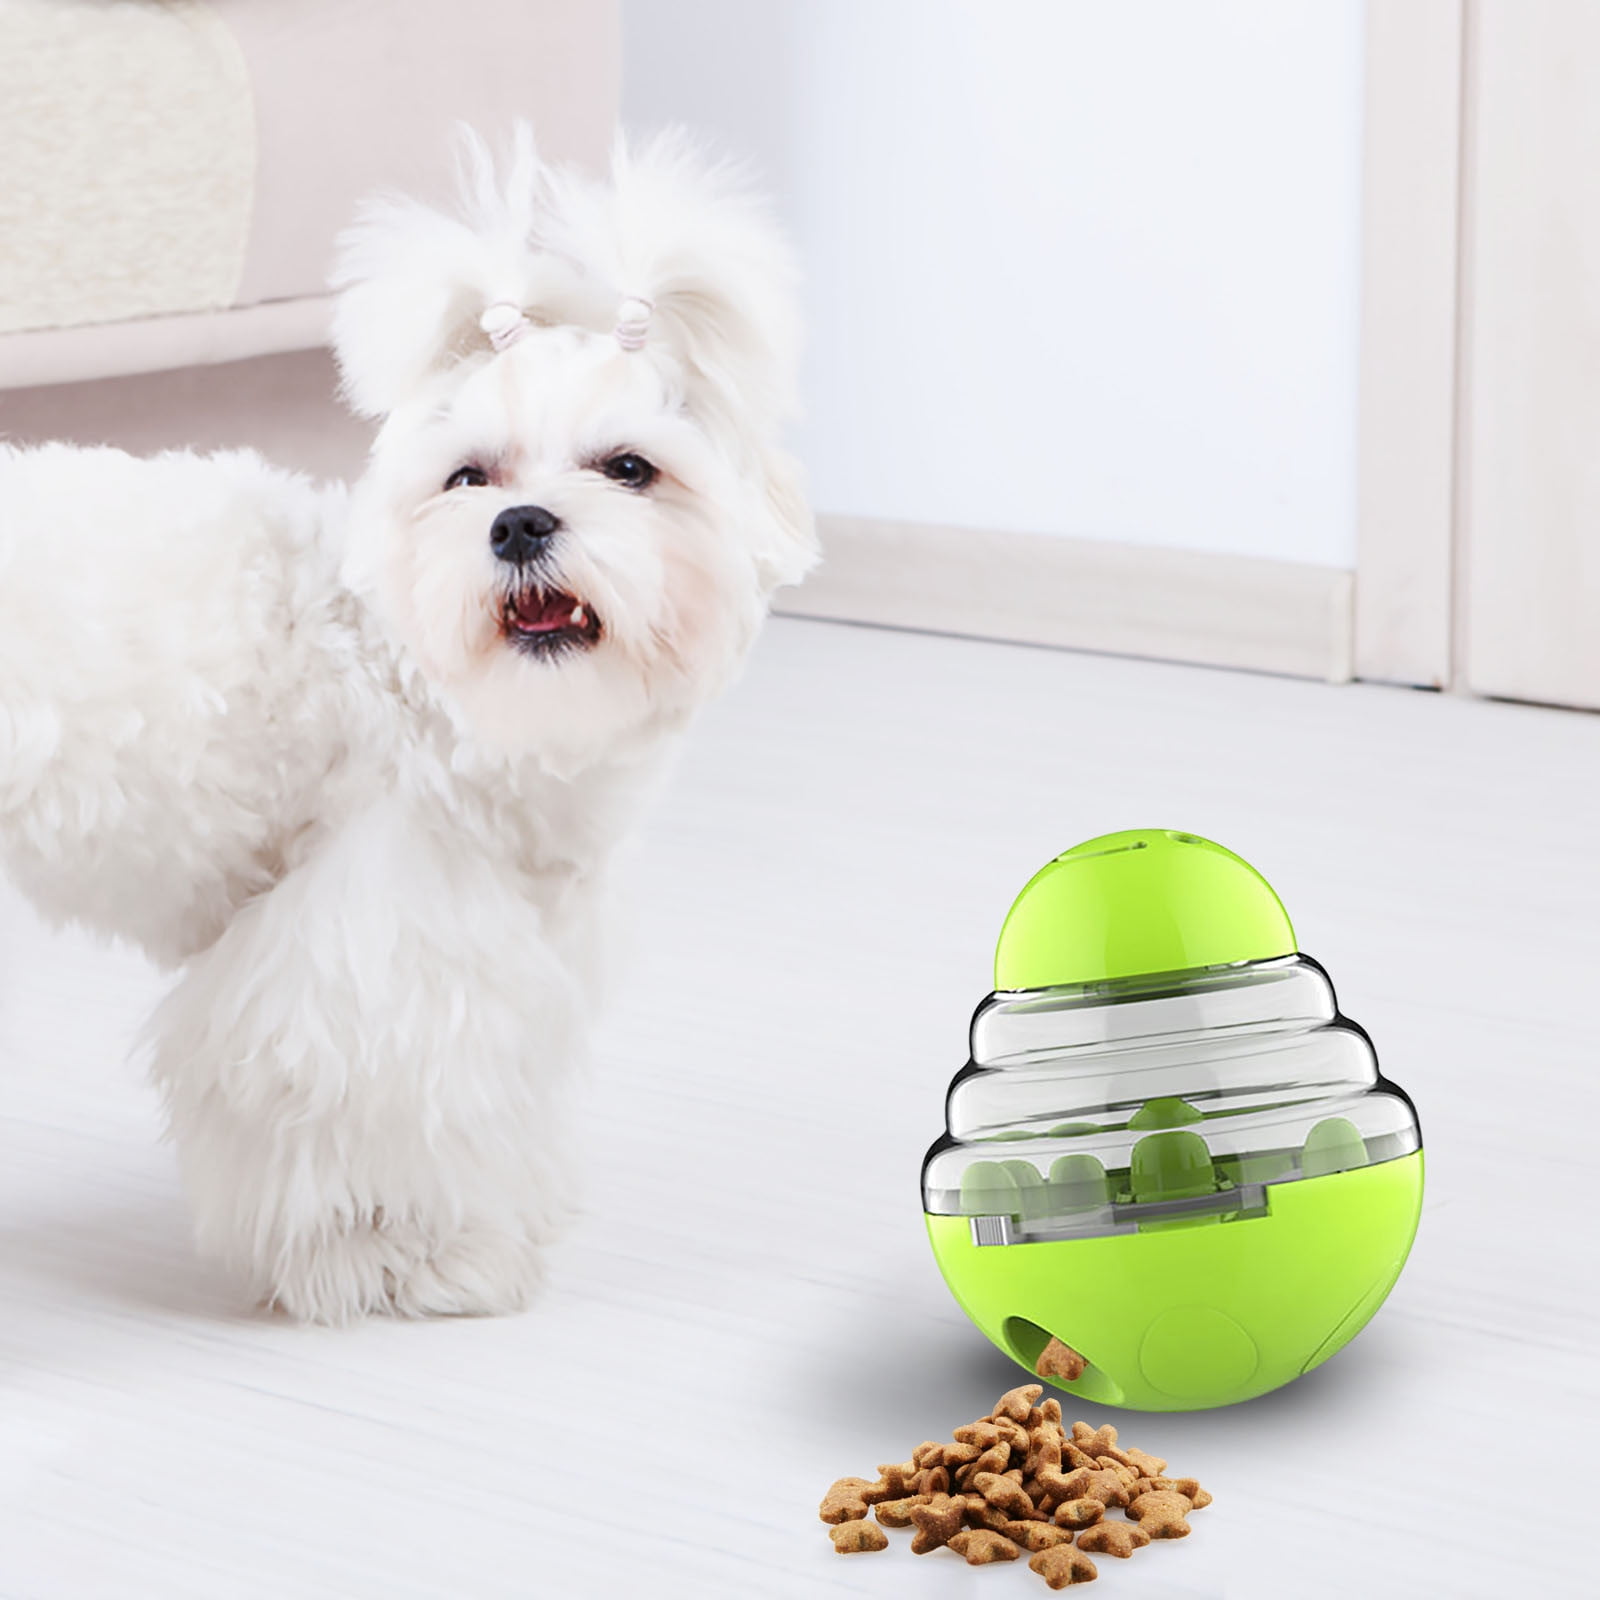 ANYPET Dog Tumbler Interactive Treat Ball, Slow Food Dispensing